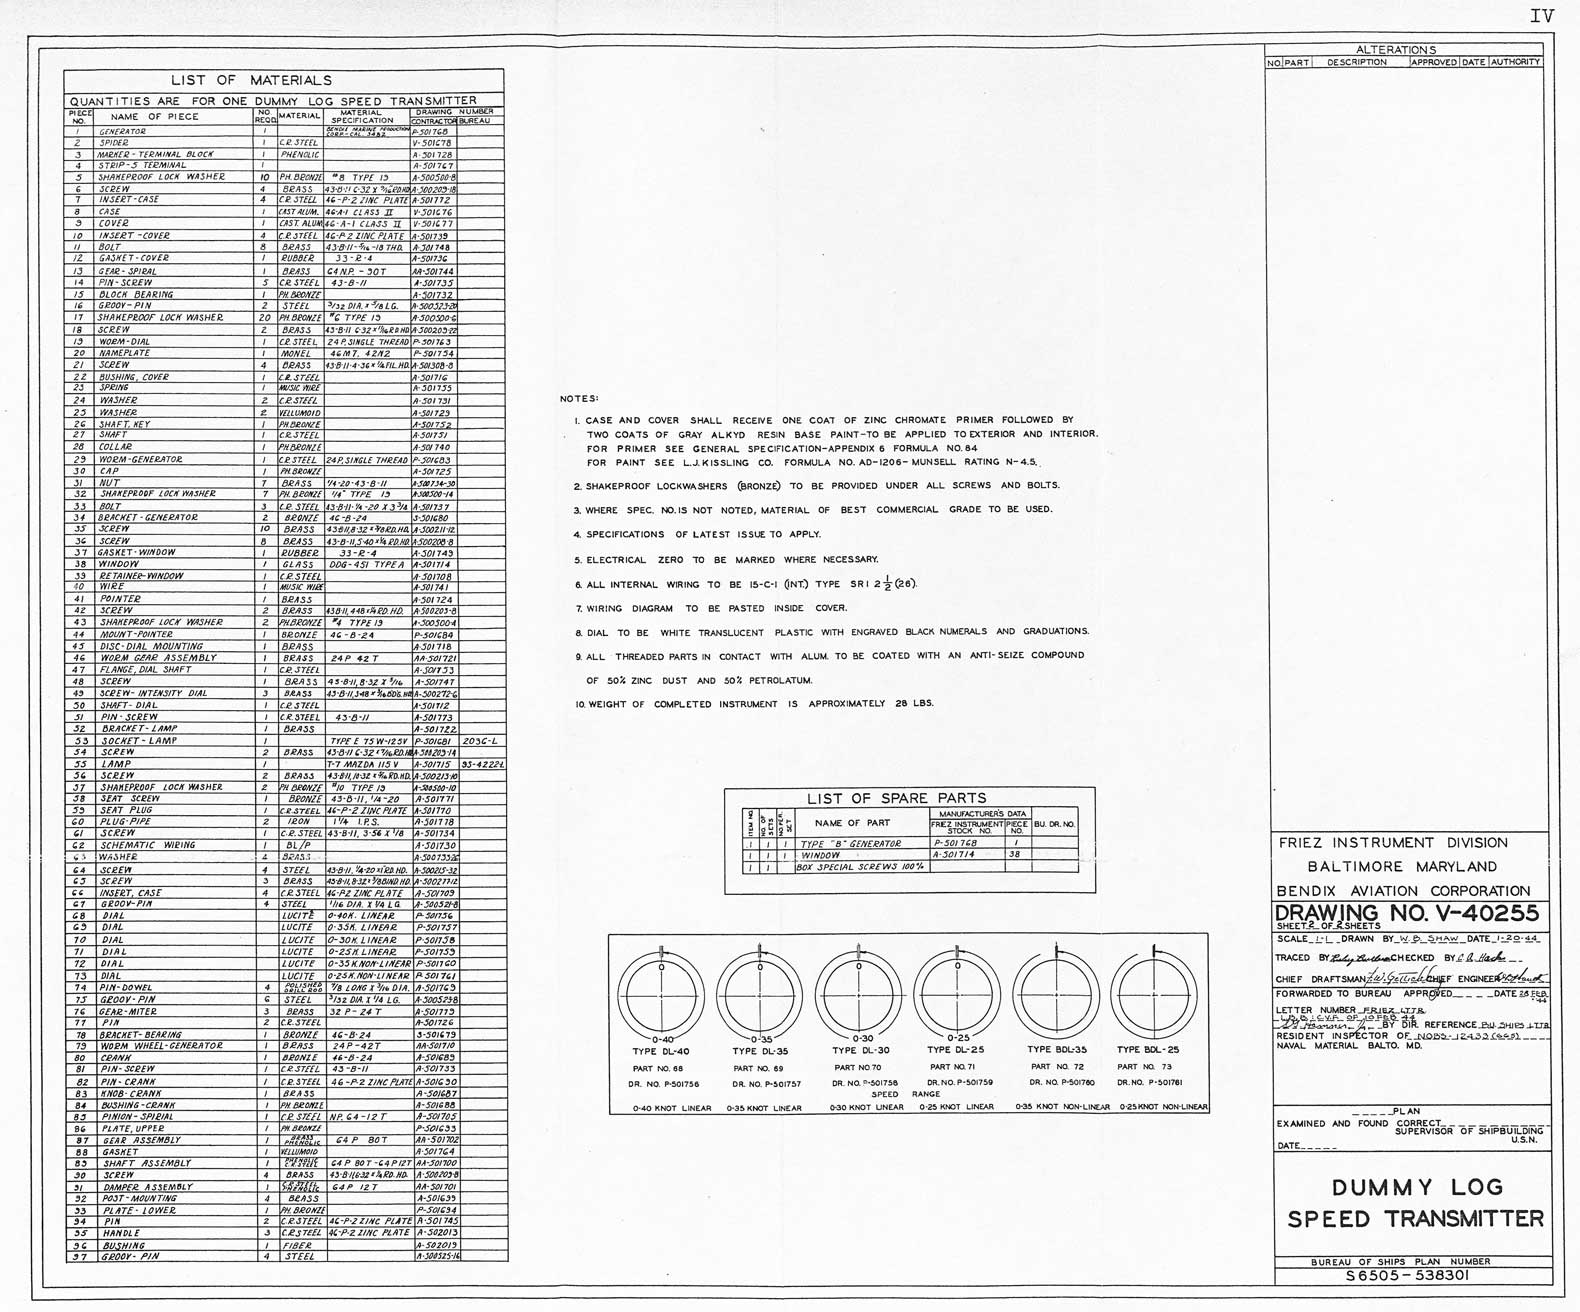 V-40255-Dummy Log Speed Transmitter-Sheet 2 - Parts List